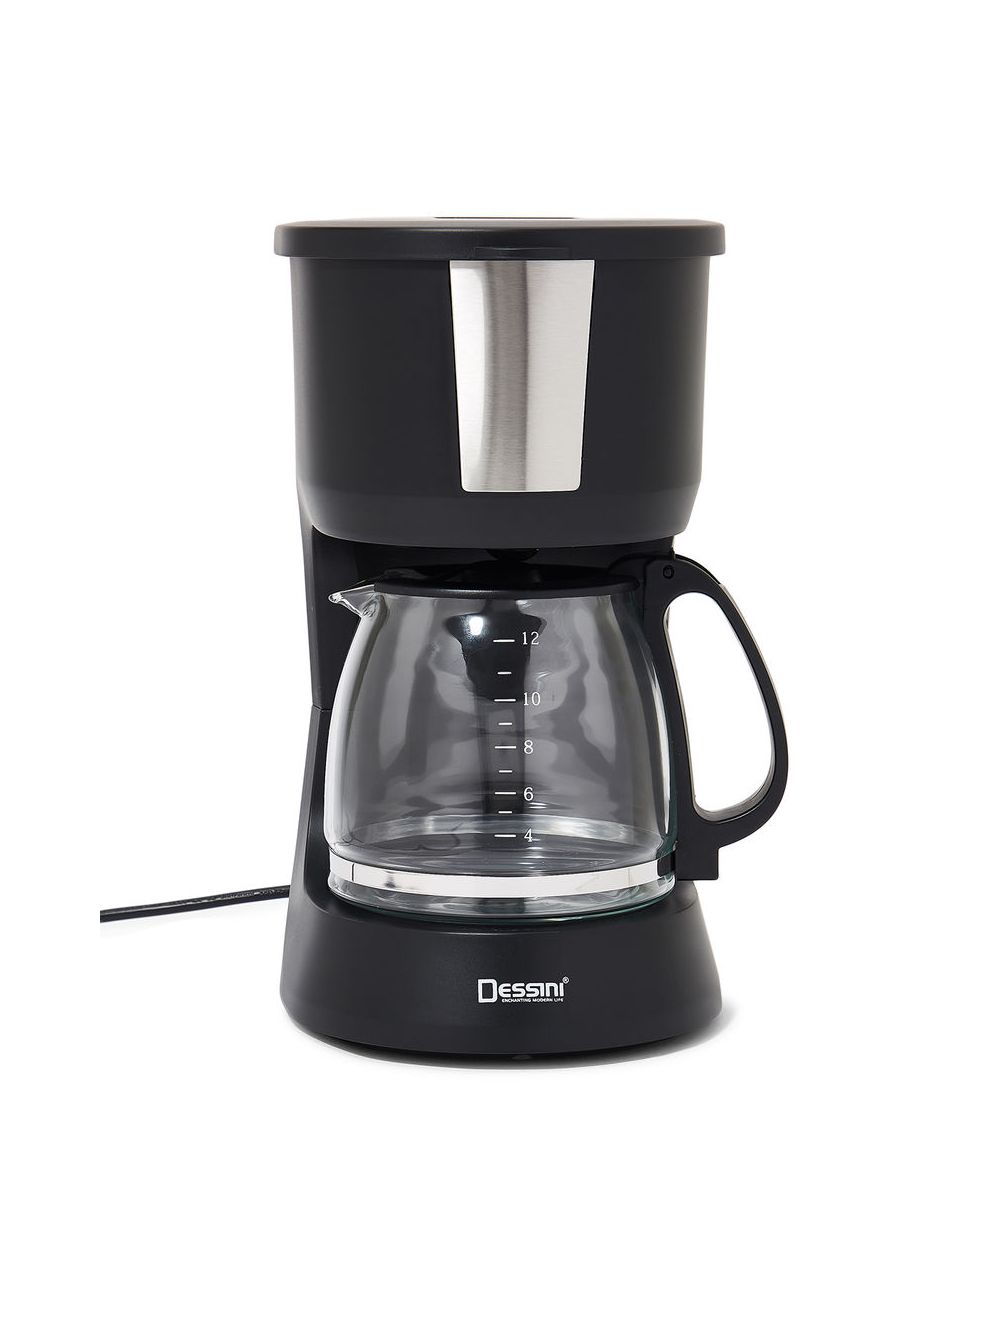 Dessini Electric Coffee Maker 12 Cup-AKAT61